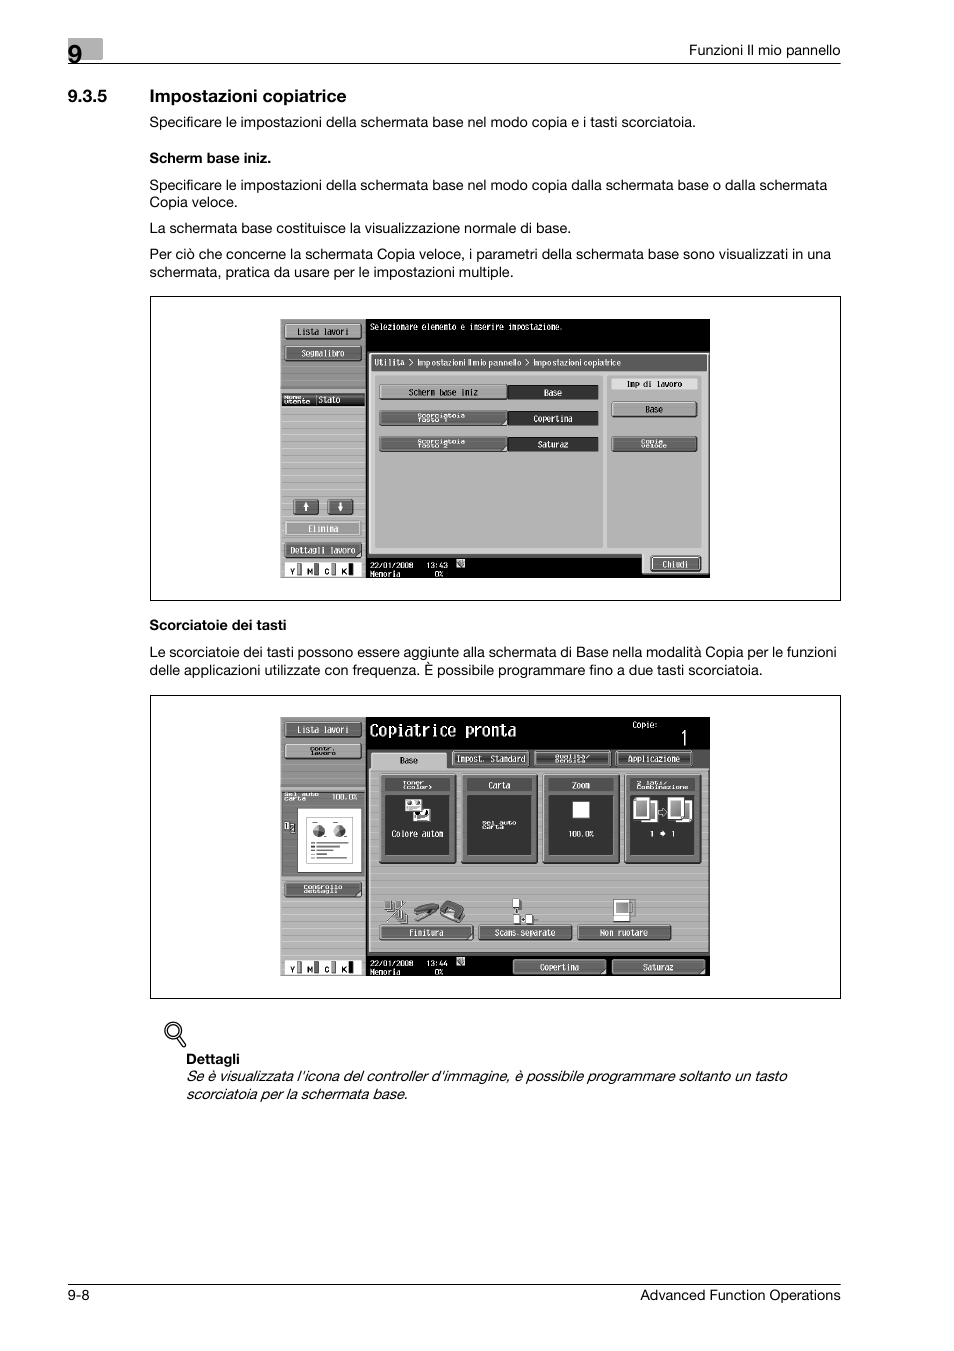 5 impostazioni copiatrice, Scherm base iniz, Scorciatoie dei tasti | Konica Minolta i-Option Manuale d'uso | Pagina 100 / 120